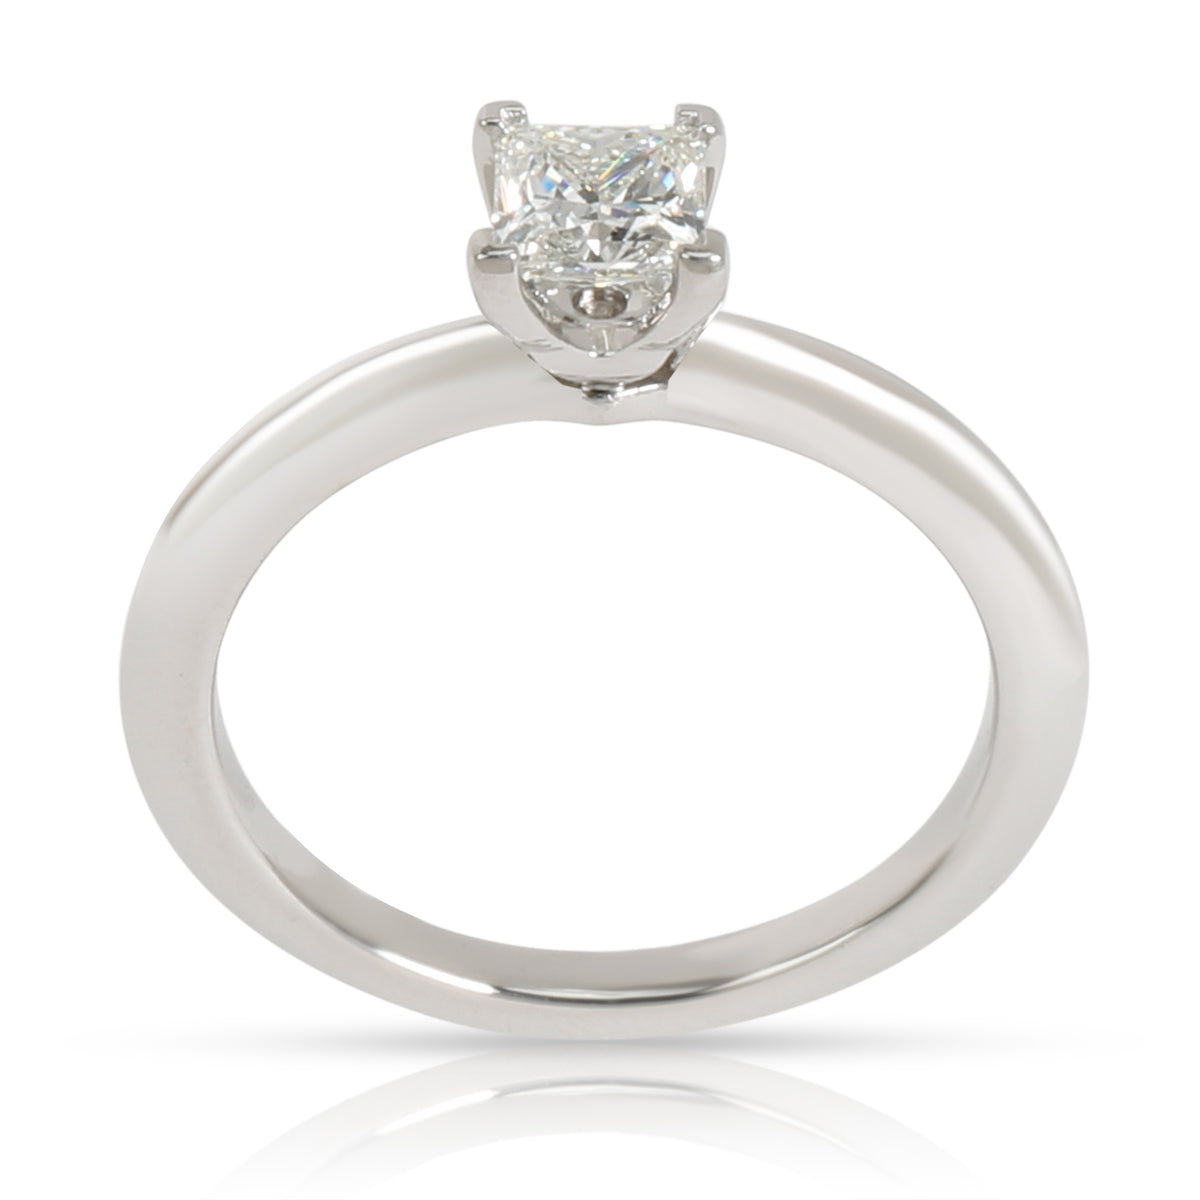 Tiffany & Co. Princess Diamond Engagement Ring in Platinum (I-VS2)0.42 CTW